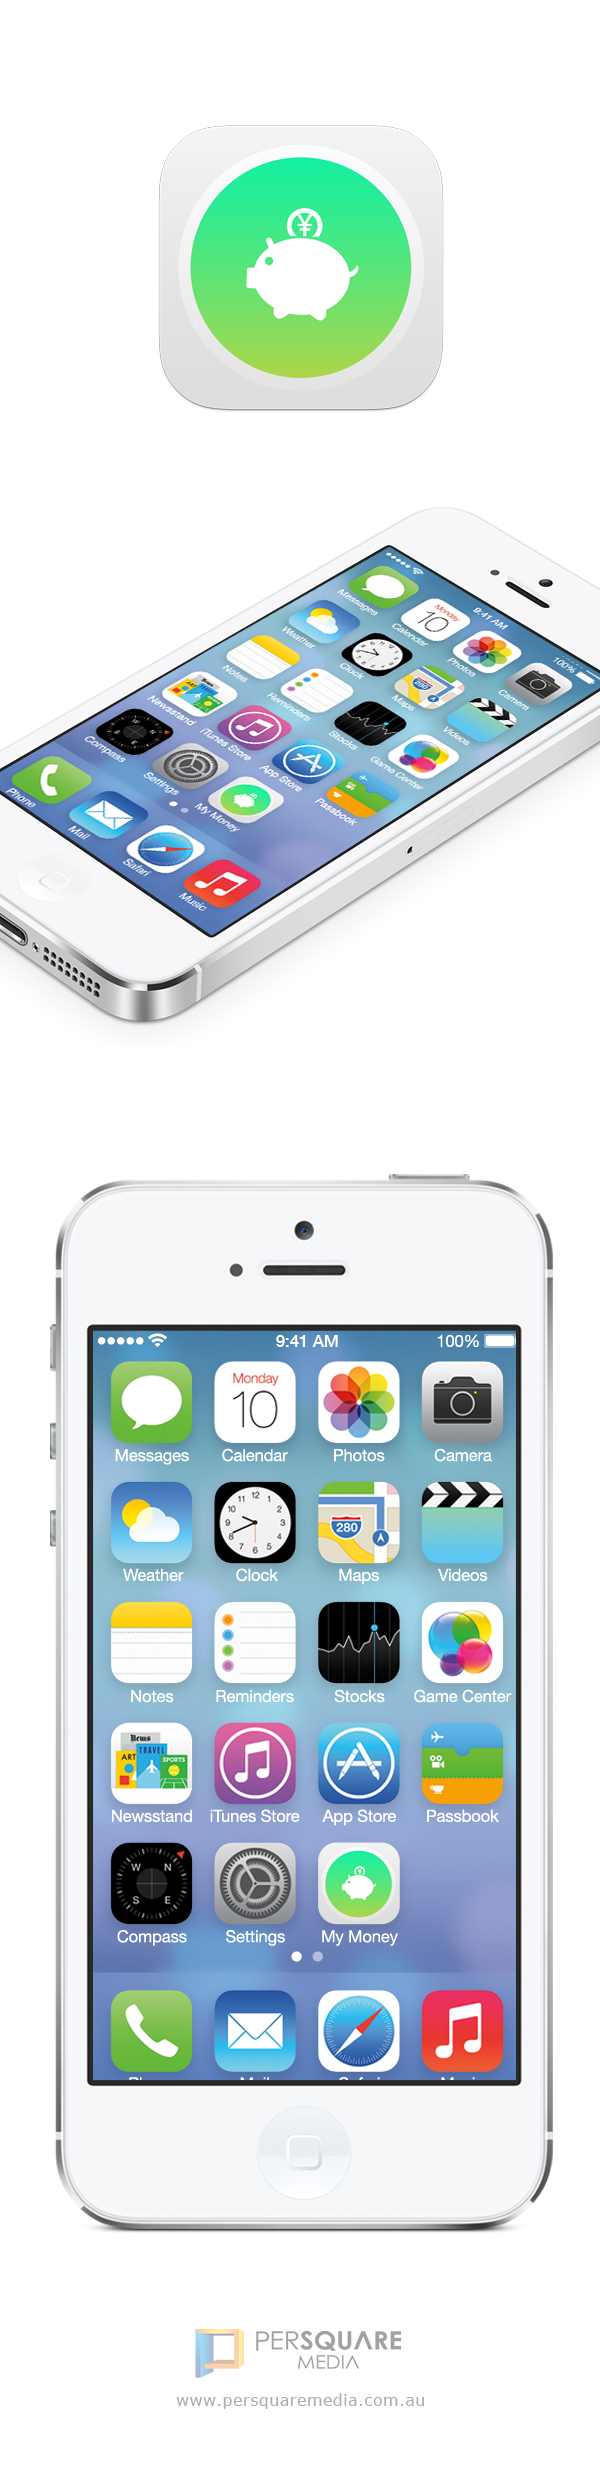 iOS 7 app Icon mobile flat